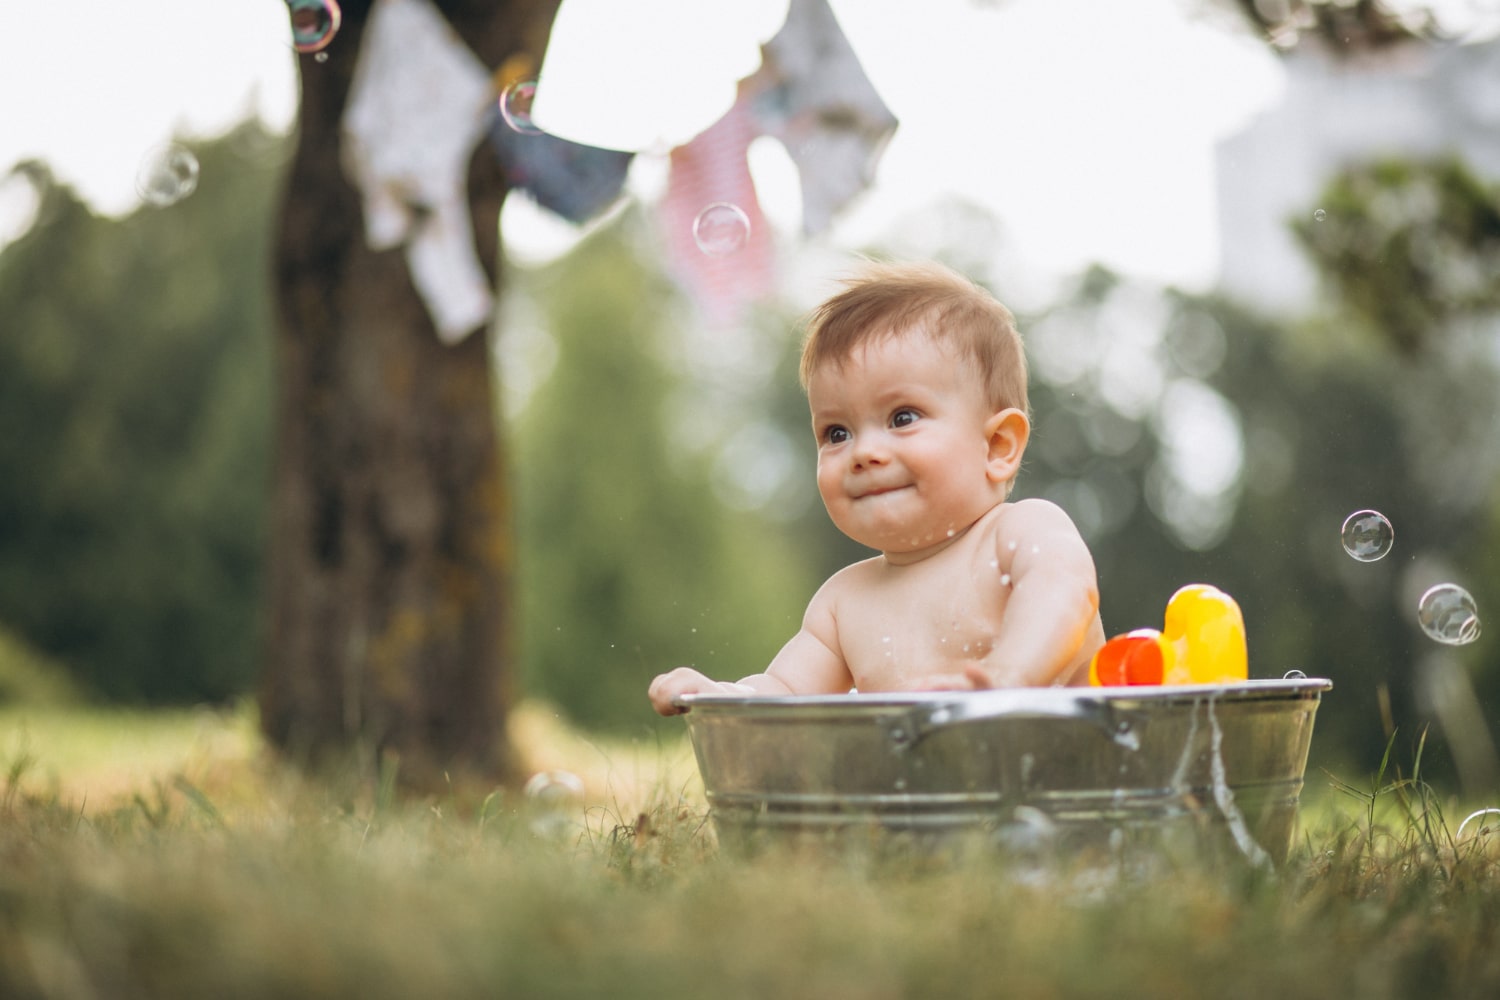 Bubble bath fun captured in a delightful newborn baby photoshoot